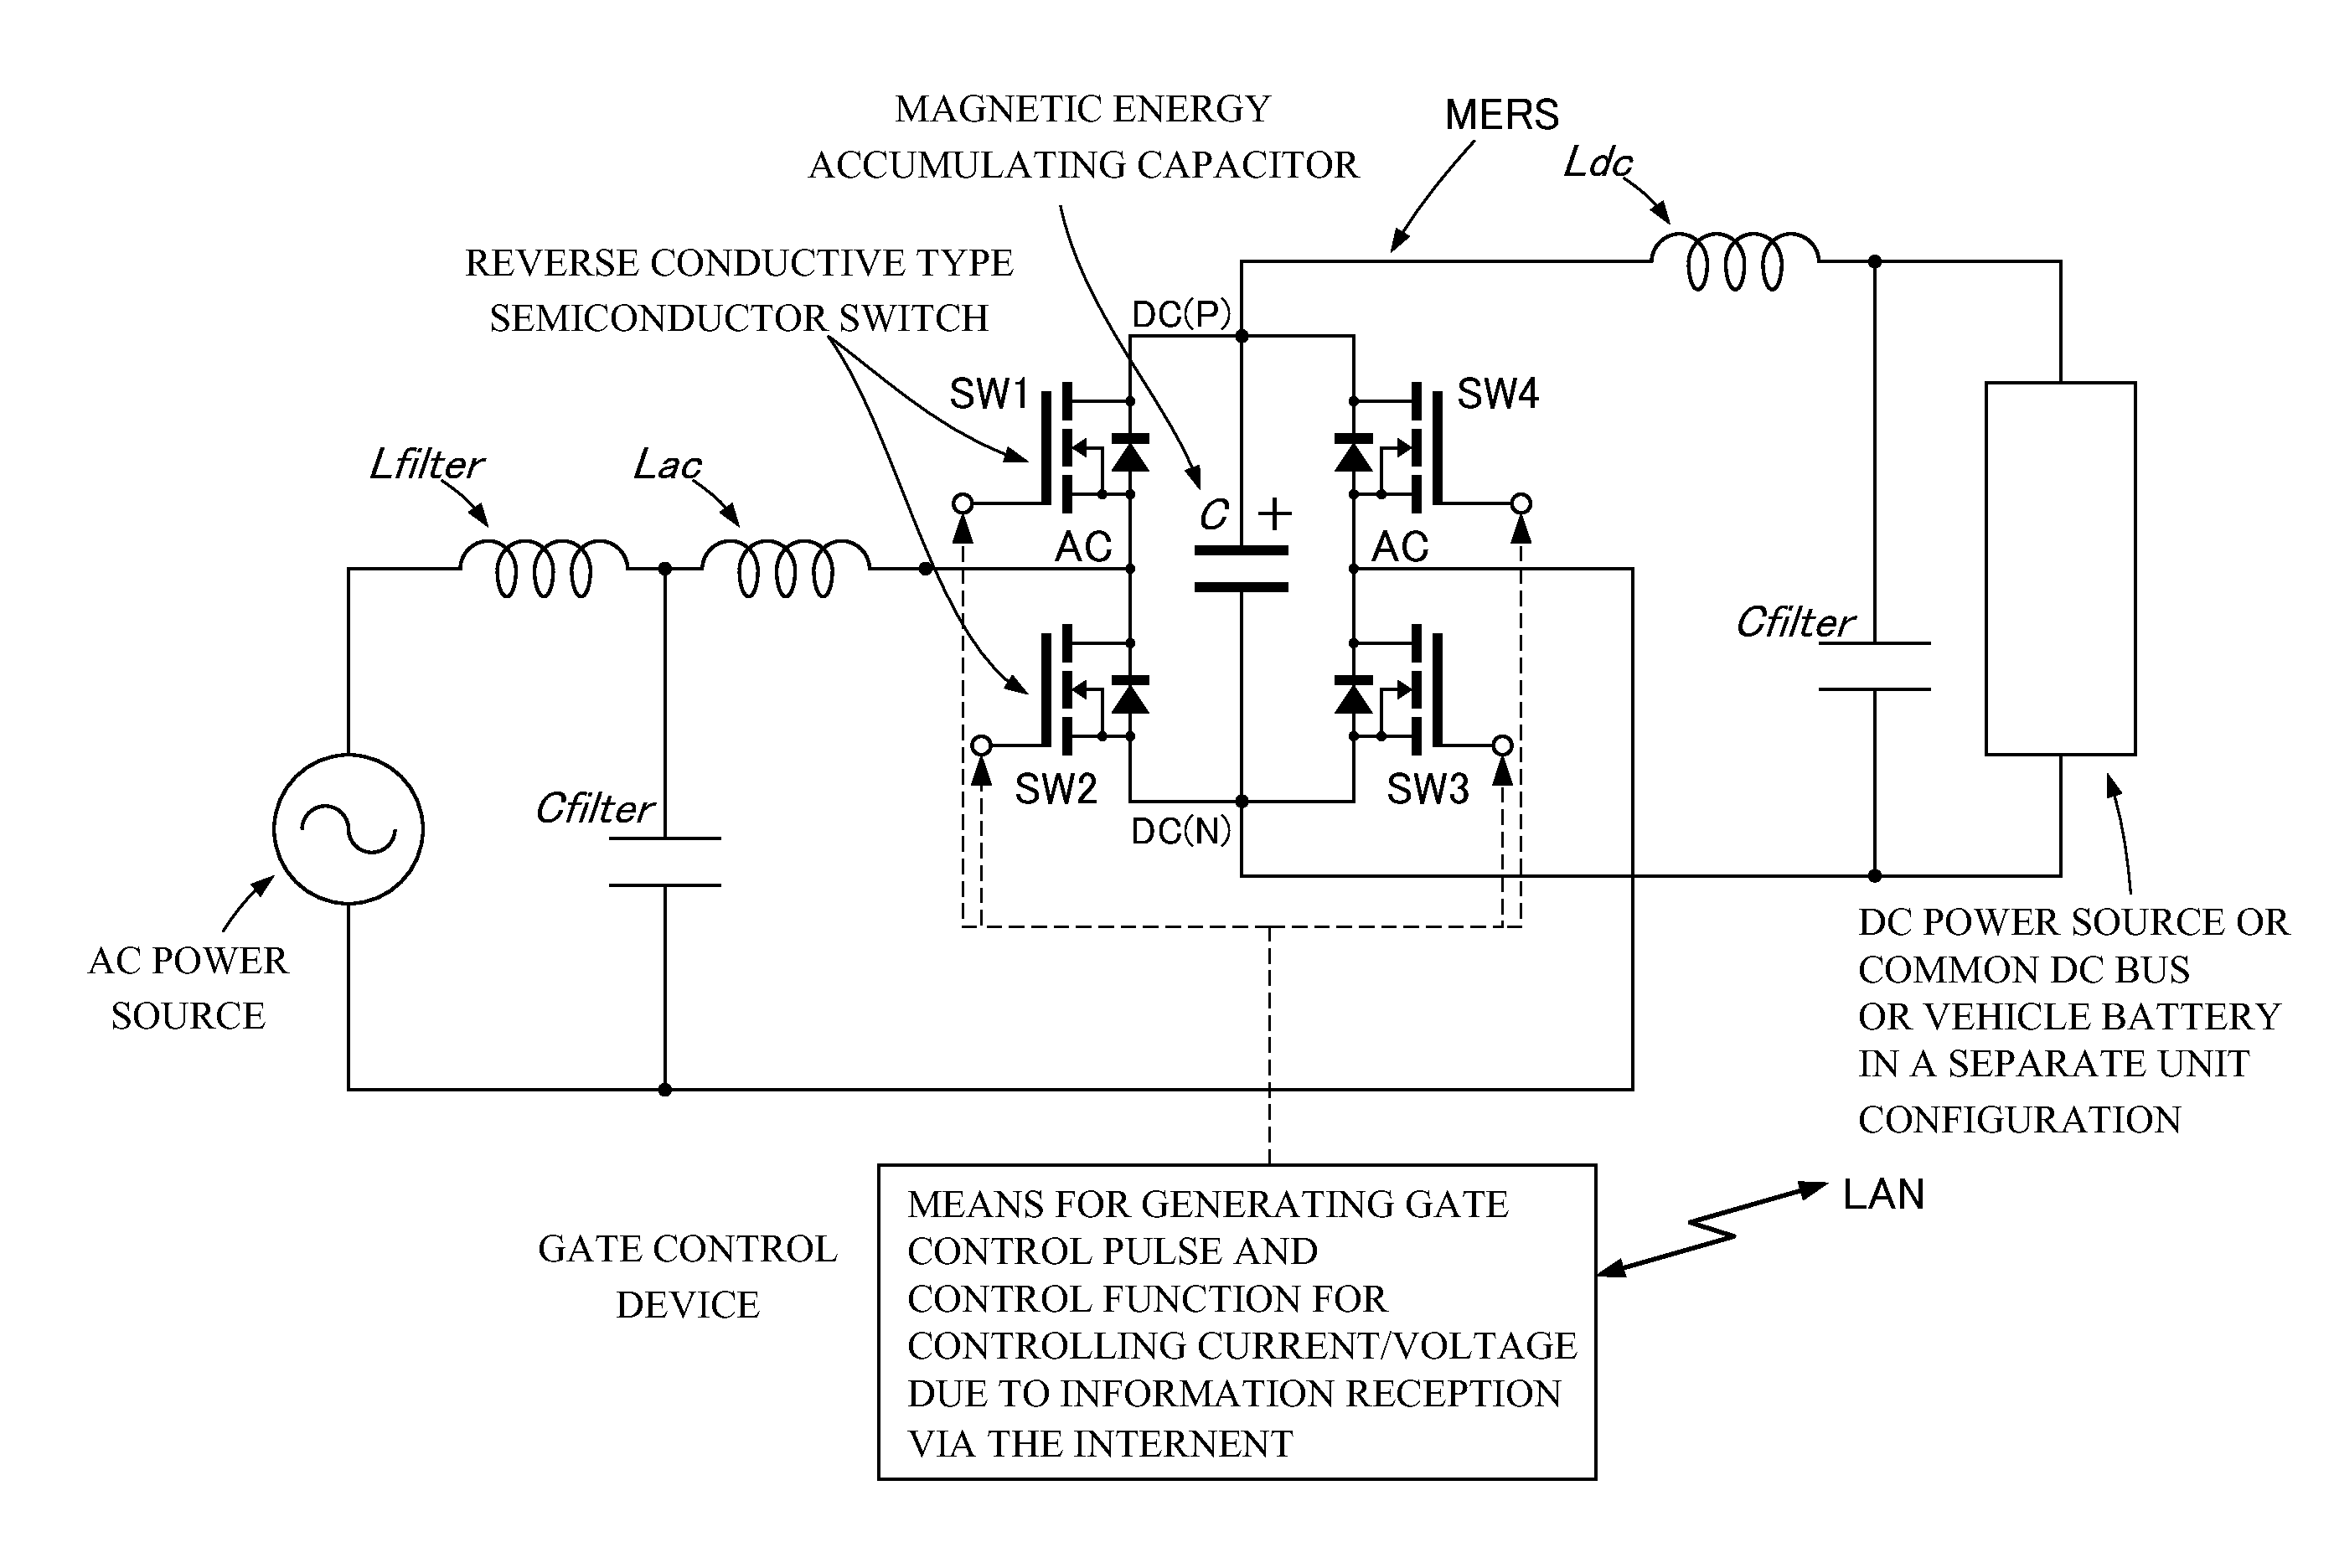 Power converting apparatus